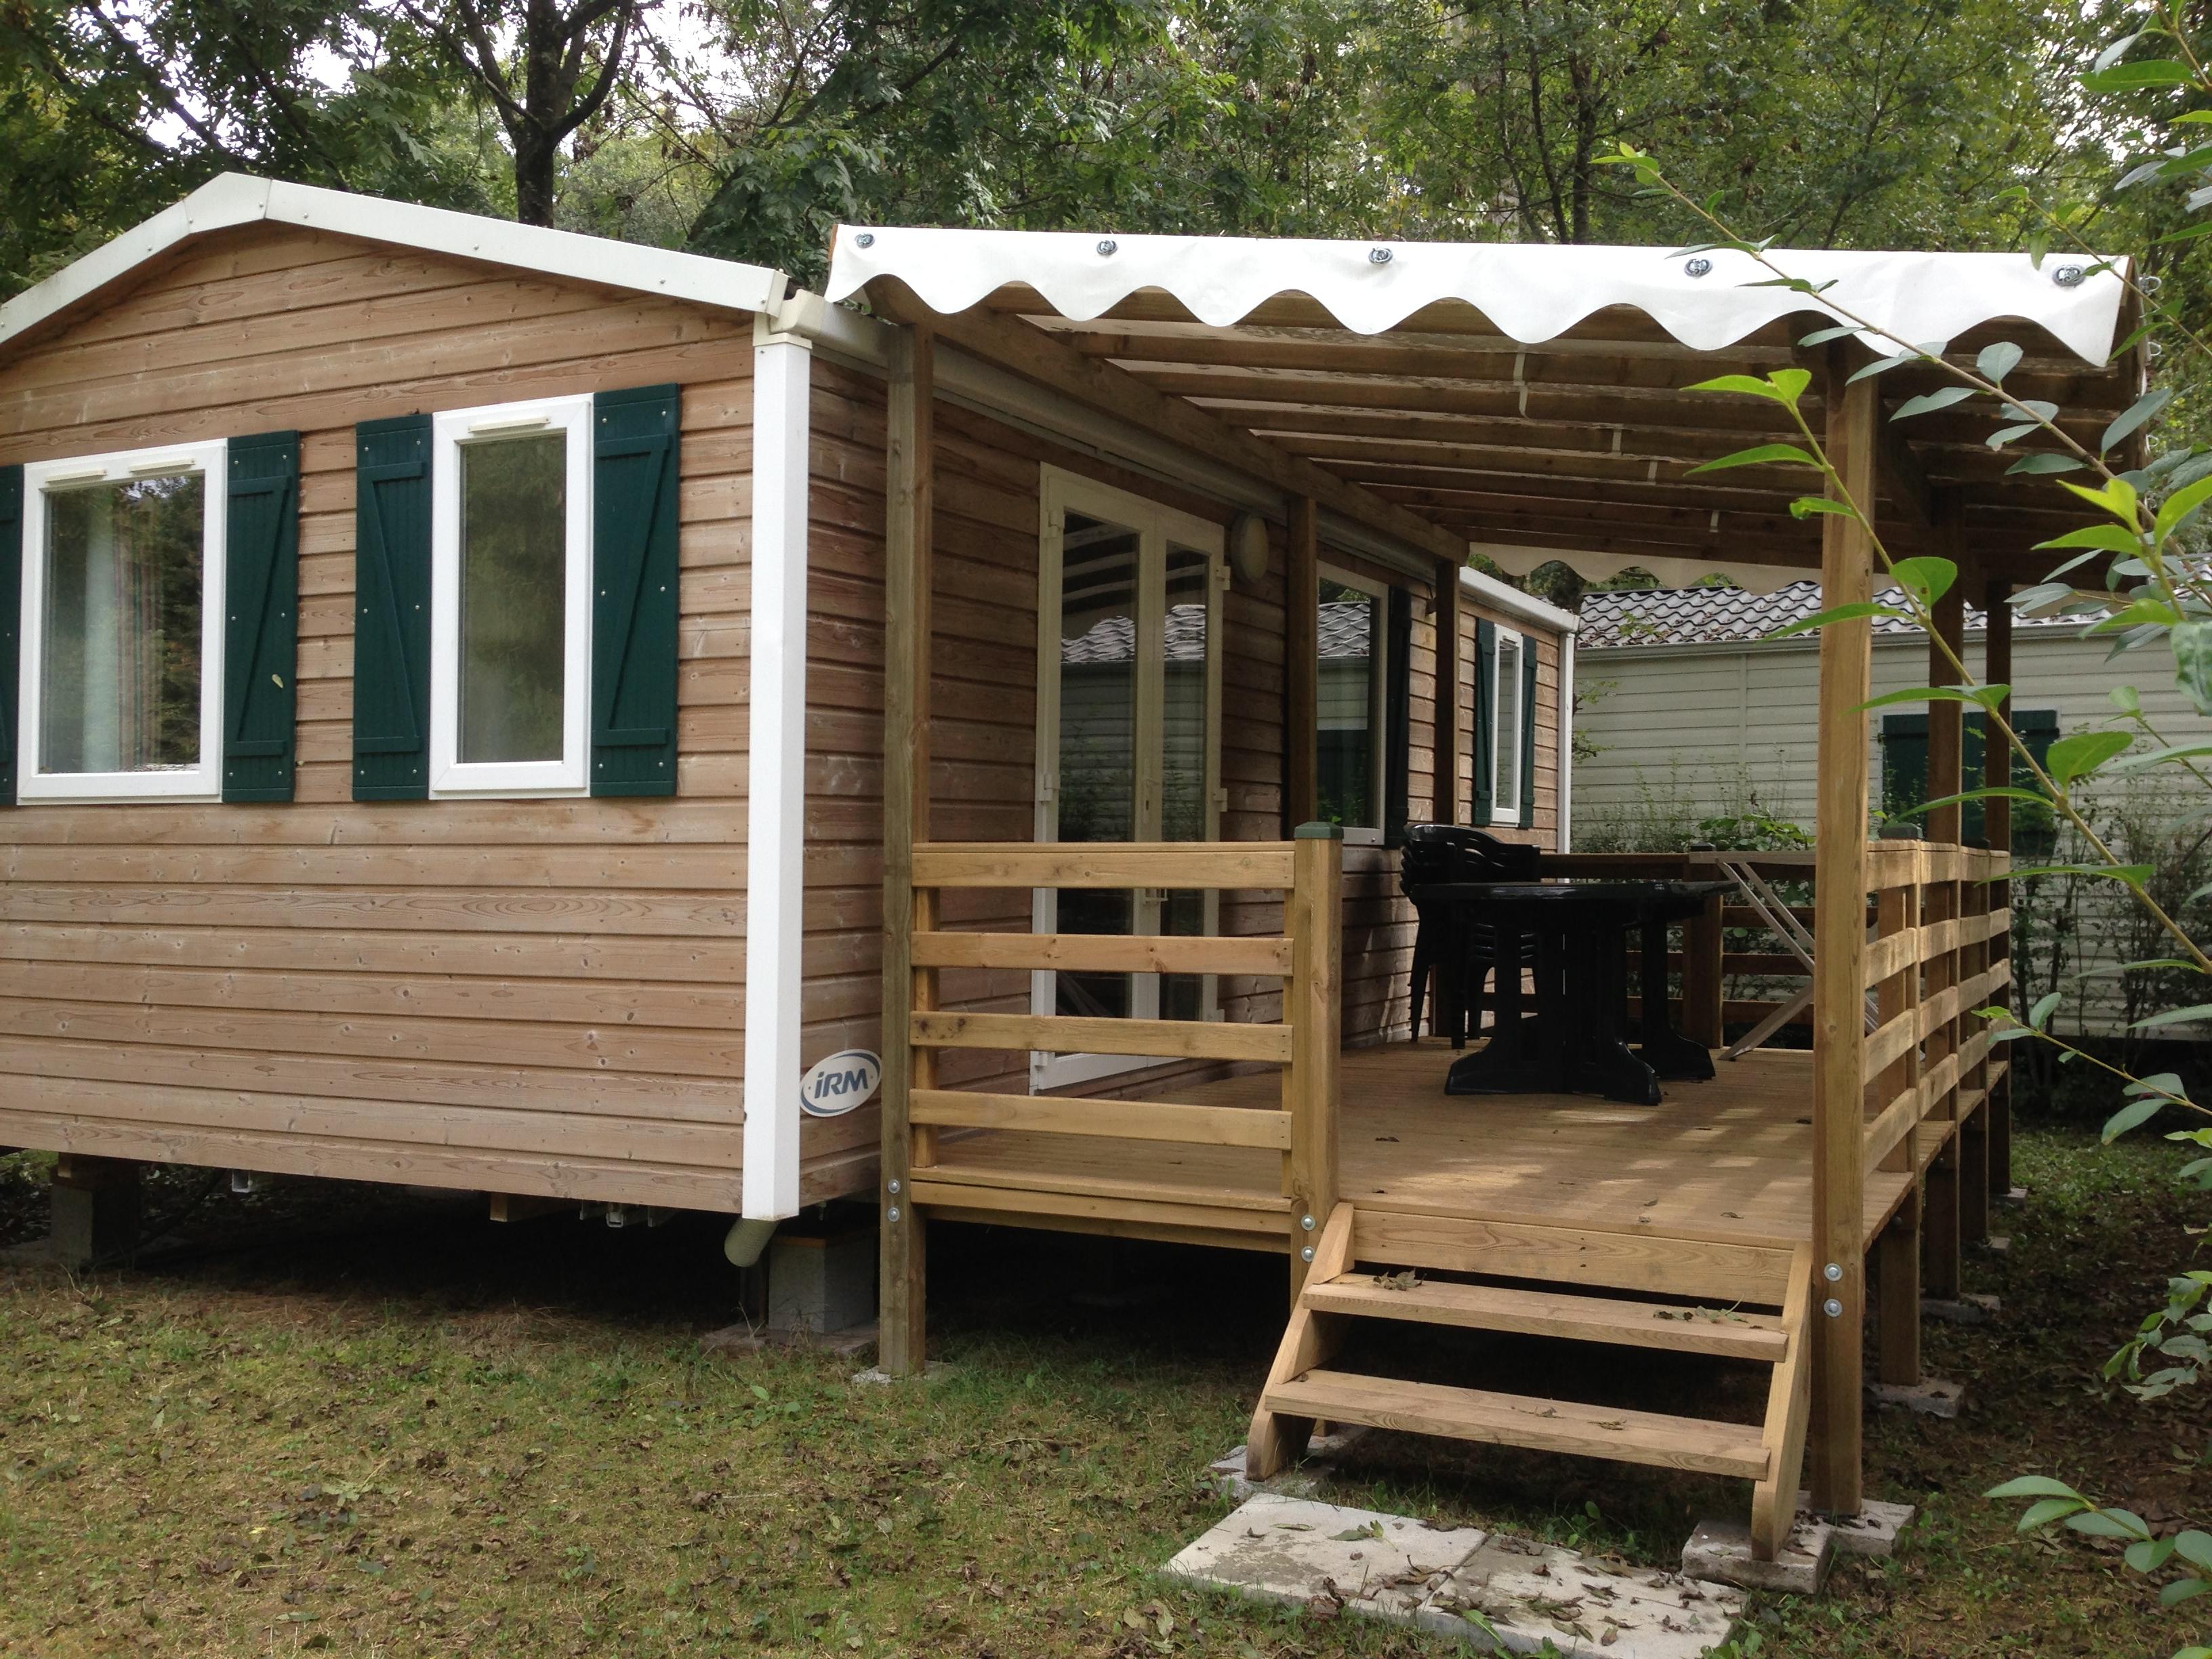 Huuraccommodatie - Mobil-Home Titania  (30 M2) - 2 Chambres - Année 2013 - Camping de Saumont